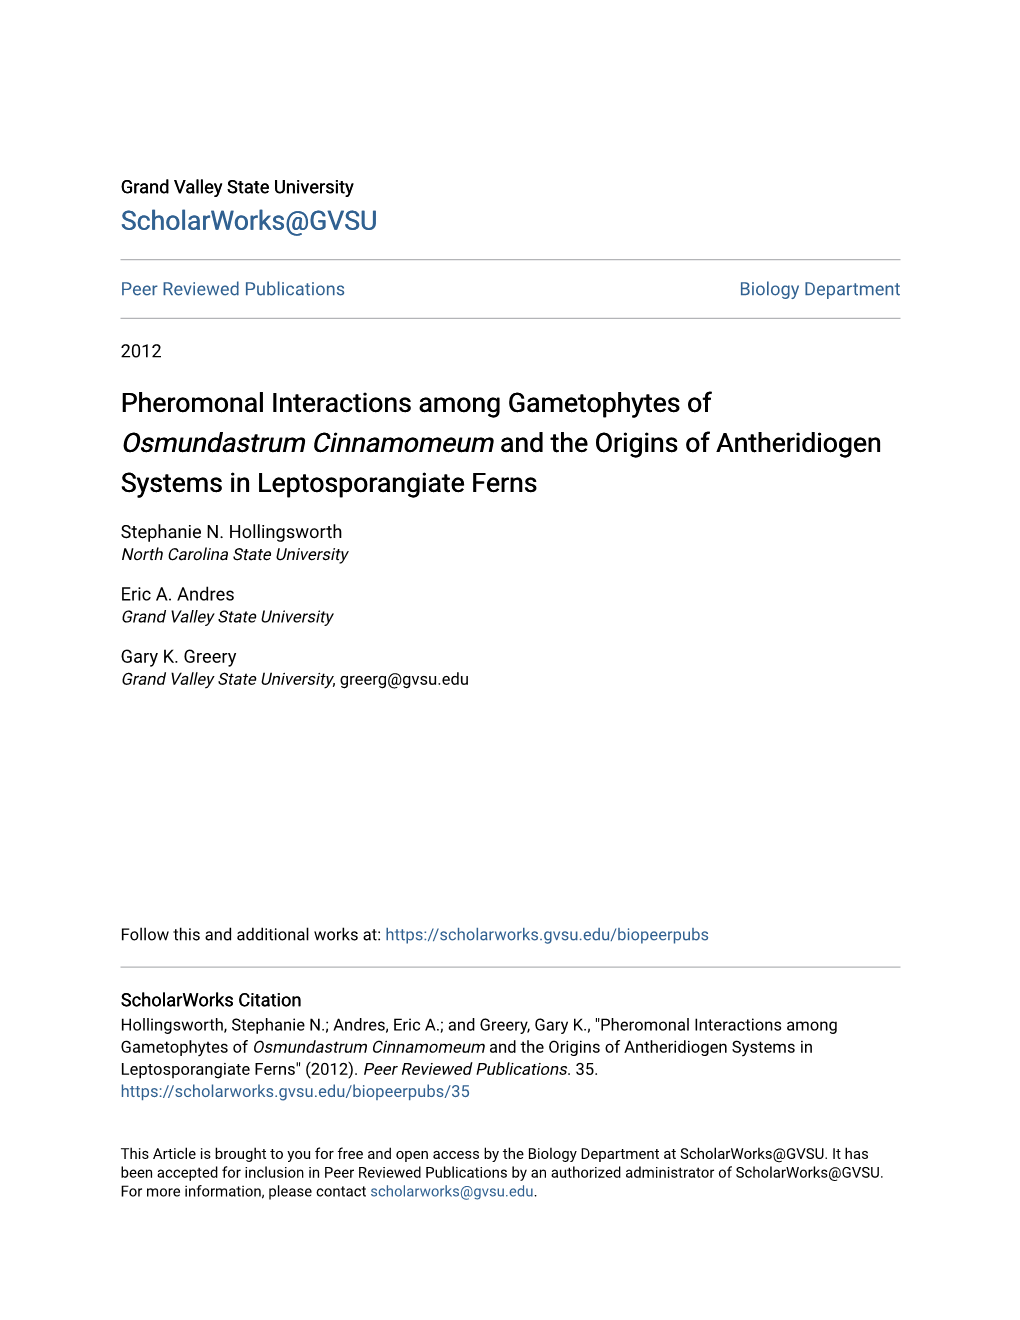 Pheromonal Interactions Among Gametophytes of &lt;I&gt;Osmundastrum